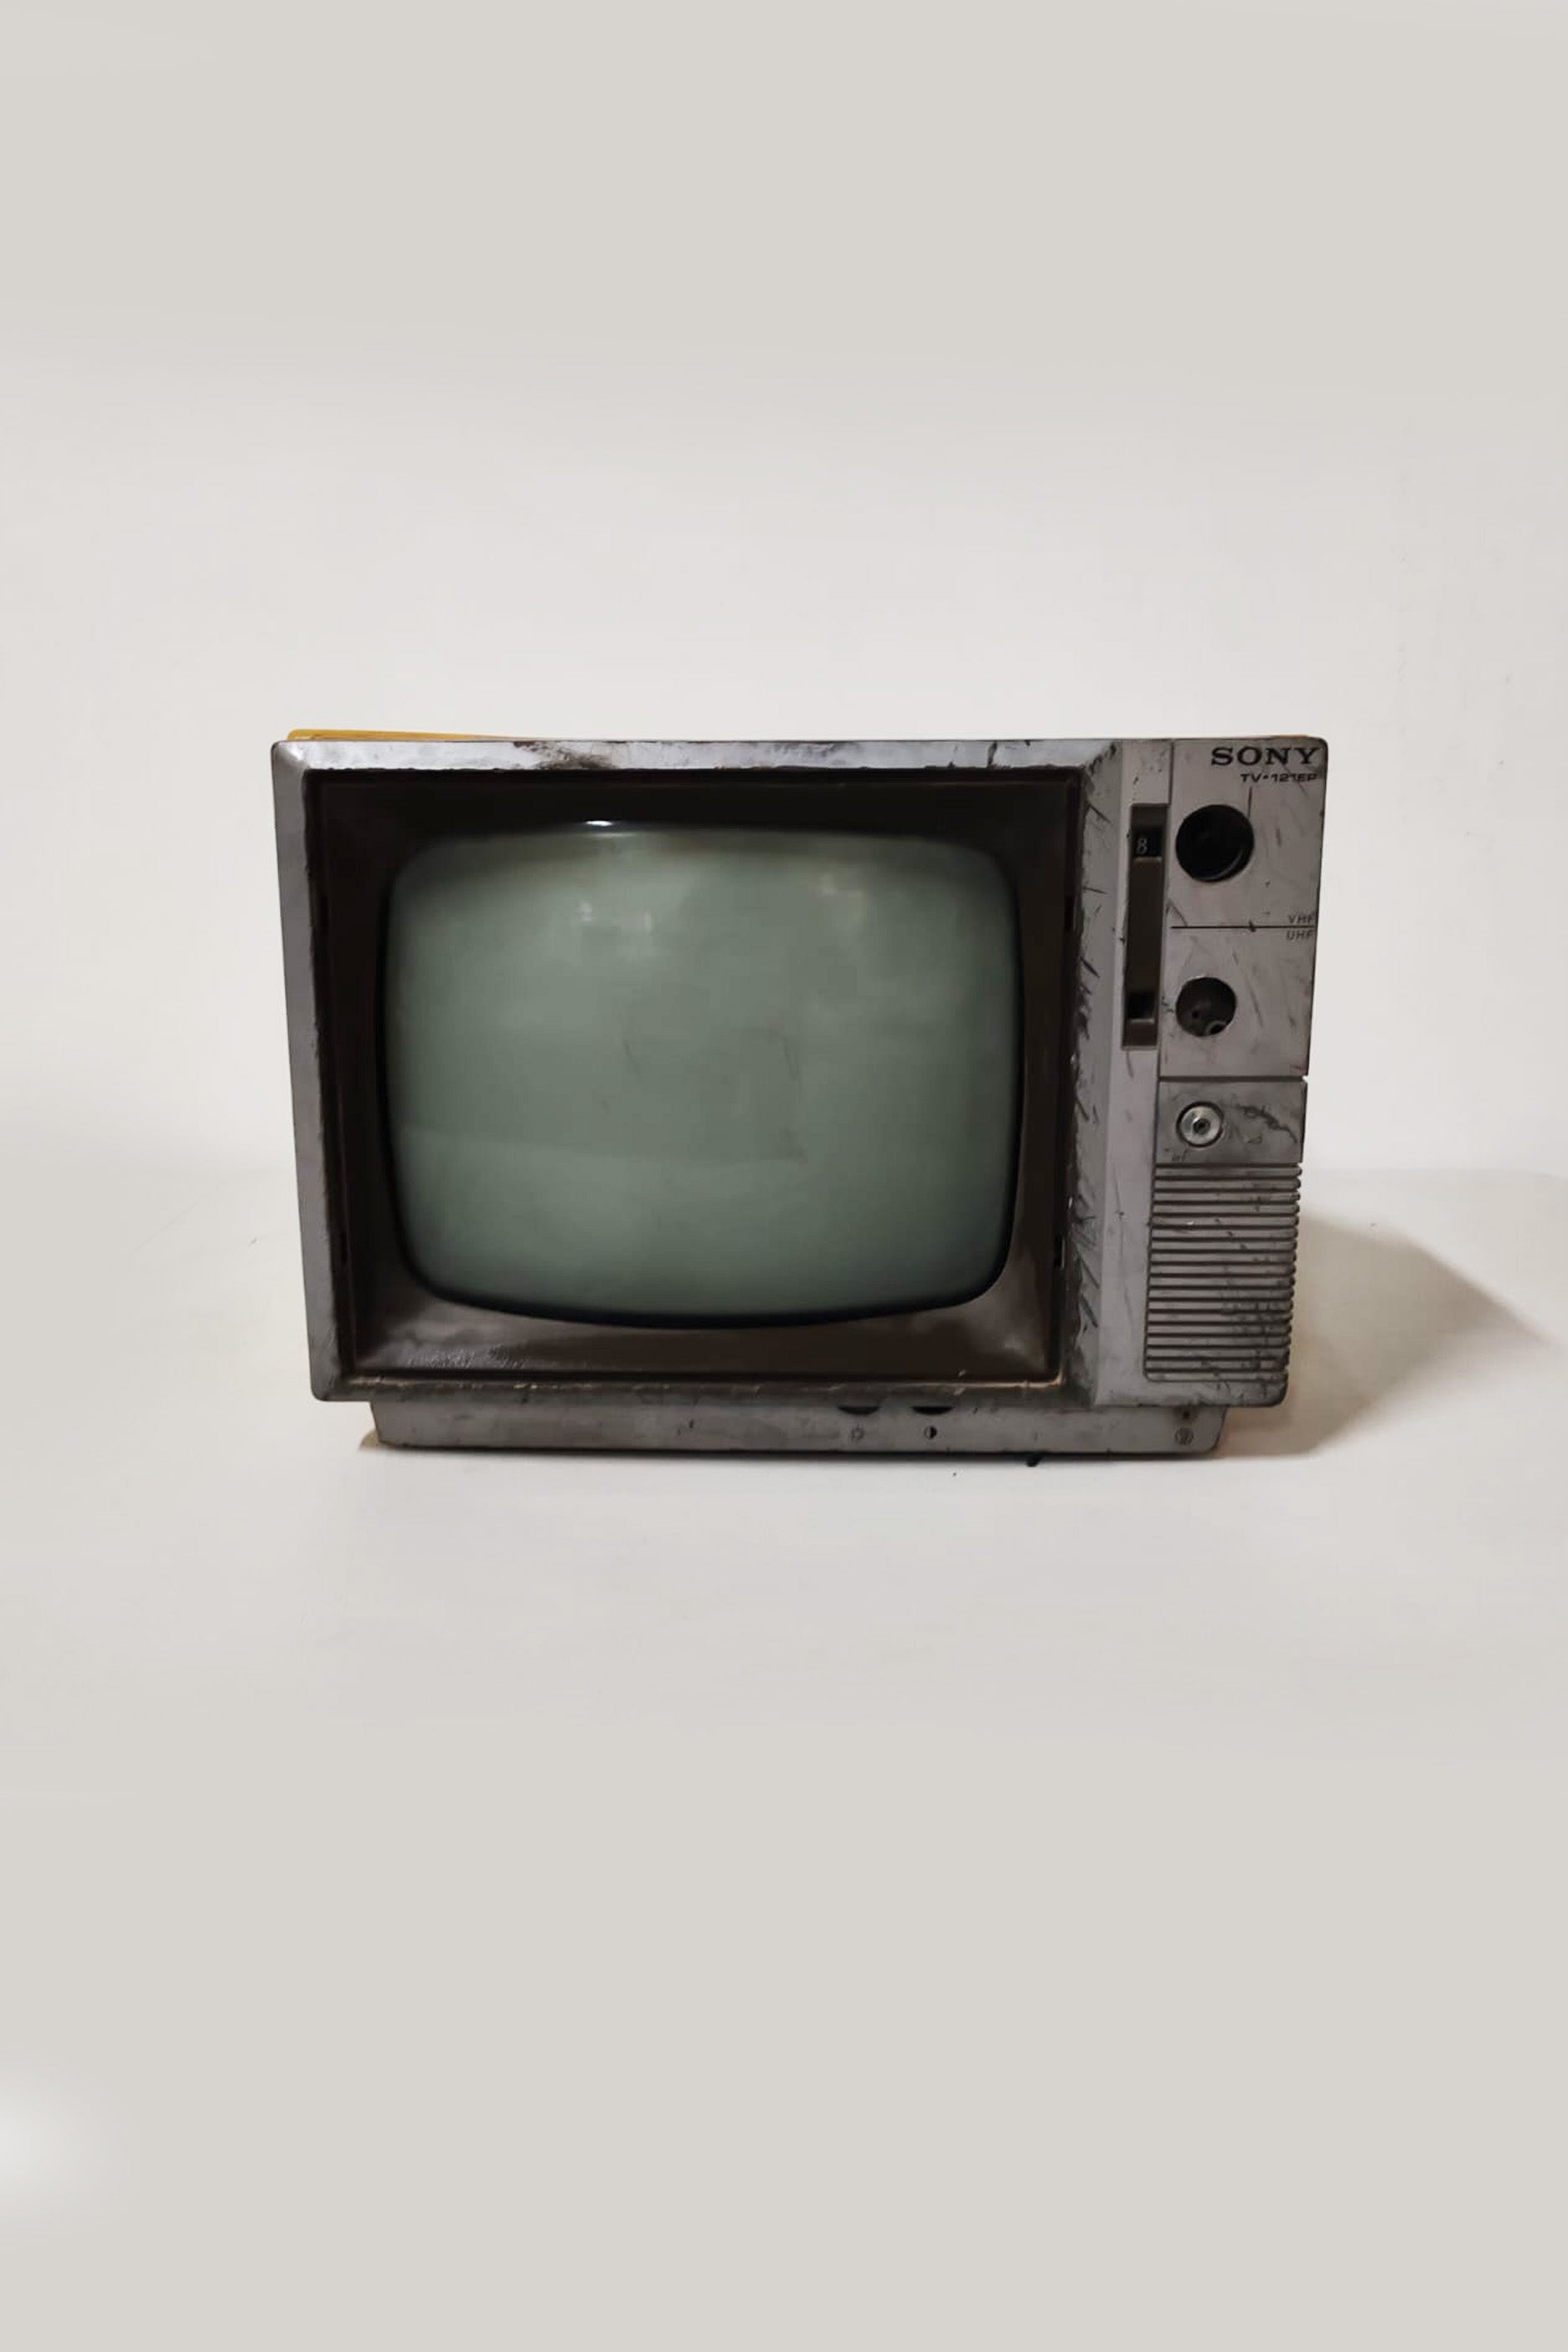 Yellow Vintage TV